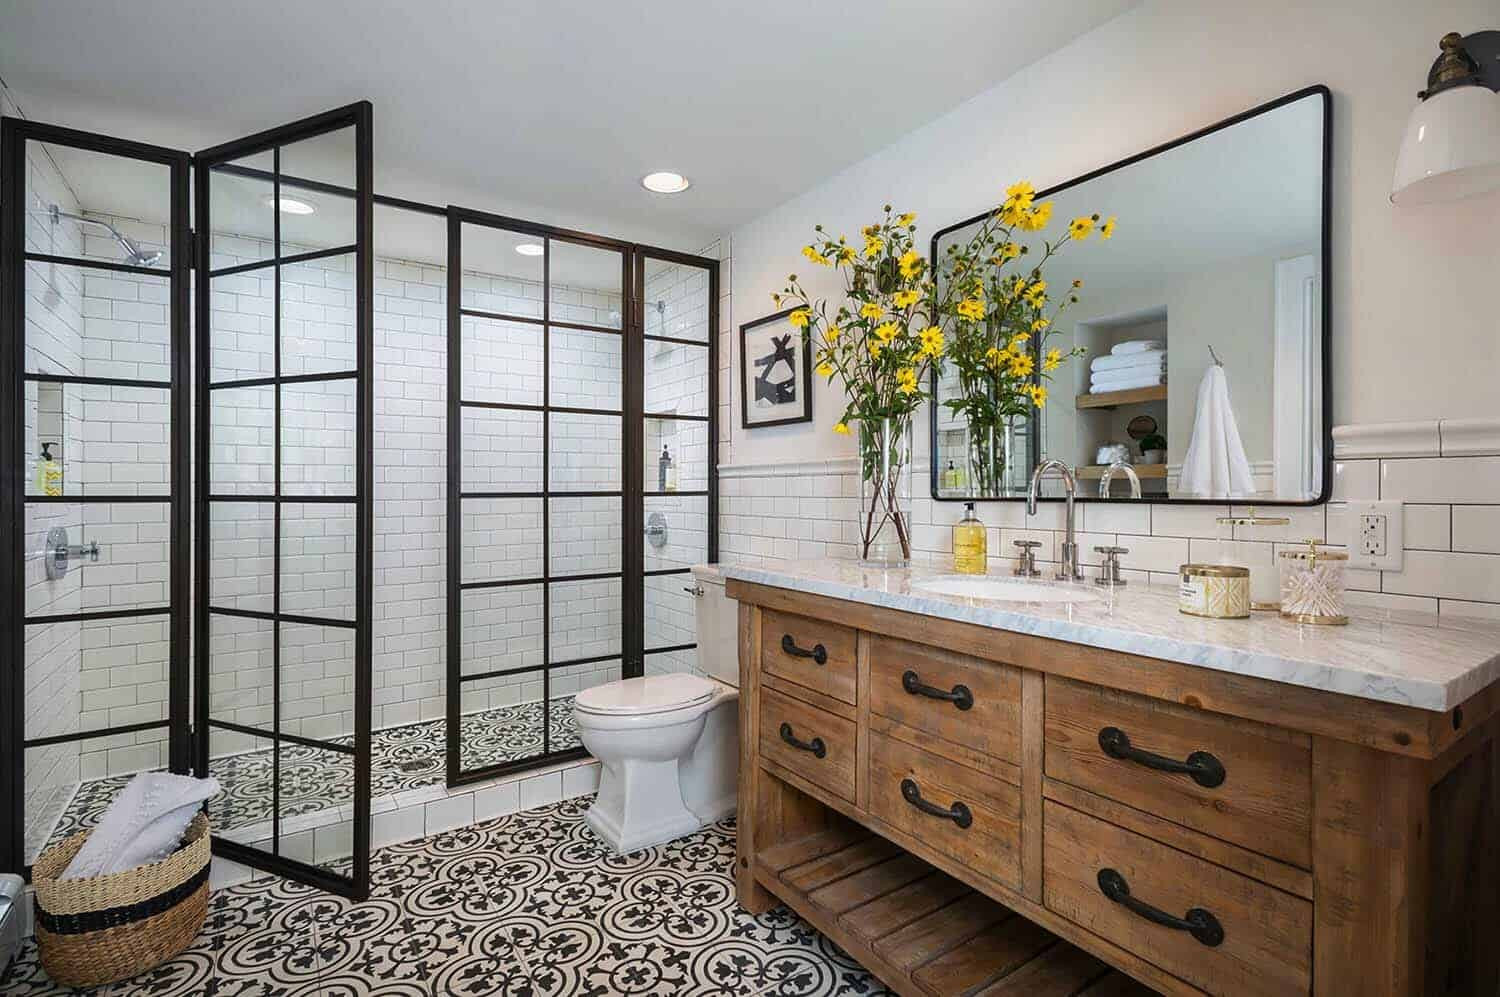 Black White Bathroom Tile
 25 Incredibly stylish black and white bathroom ideas to